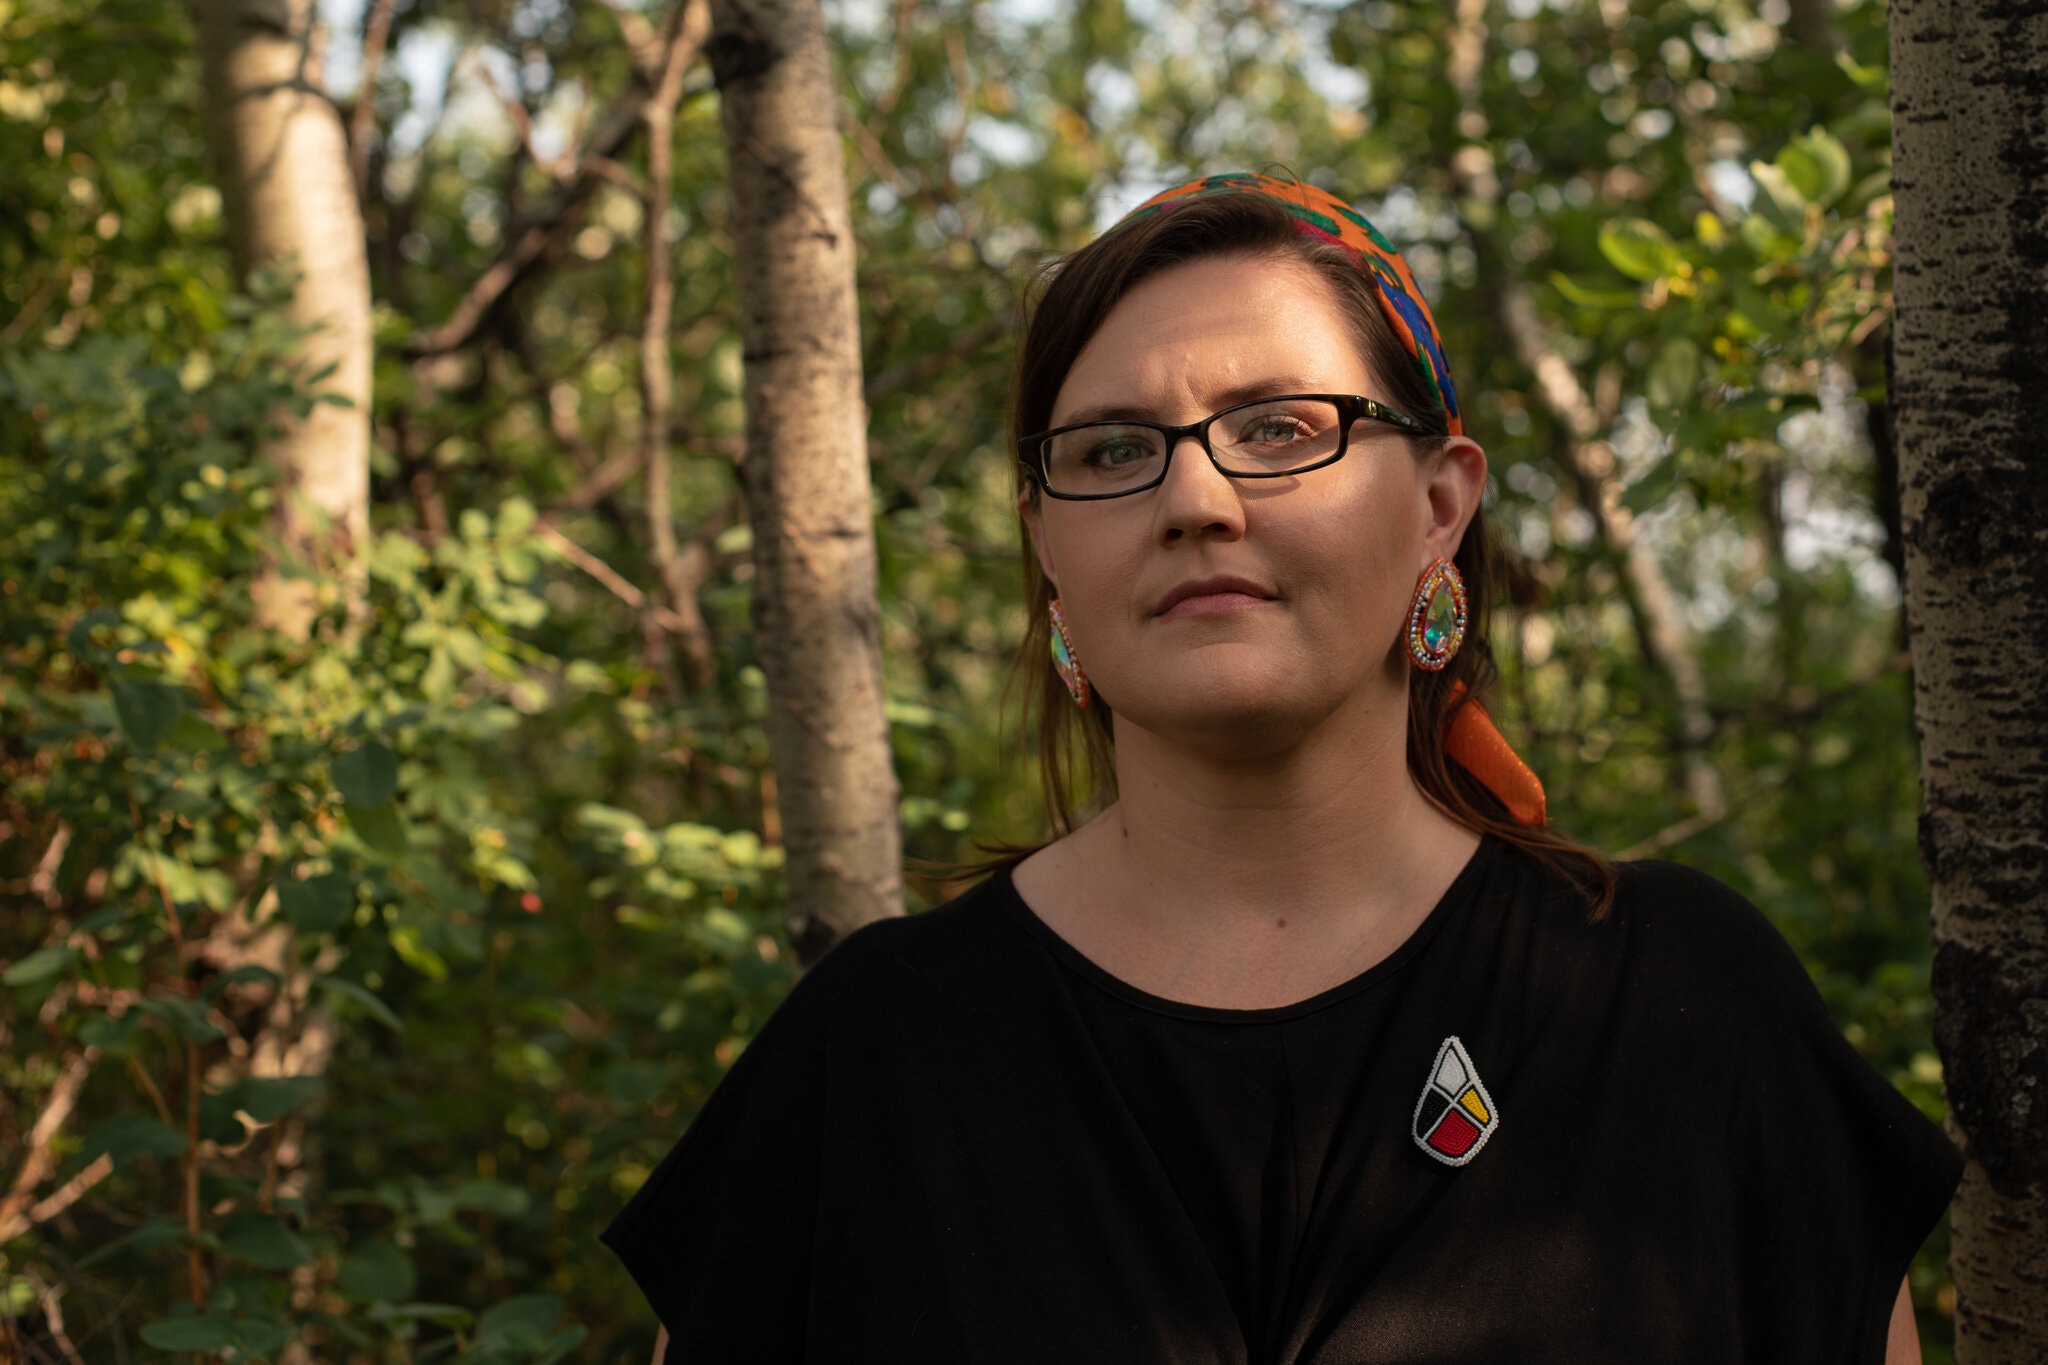 Professor Supernant’s beaded pin was created by a Métis artist. Amber Bracken for The New York Times